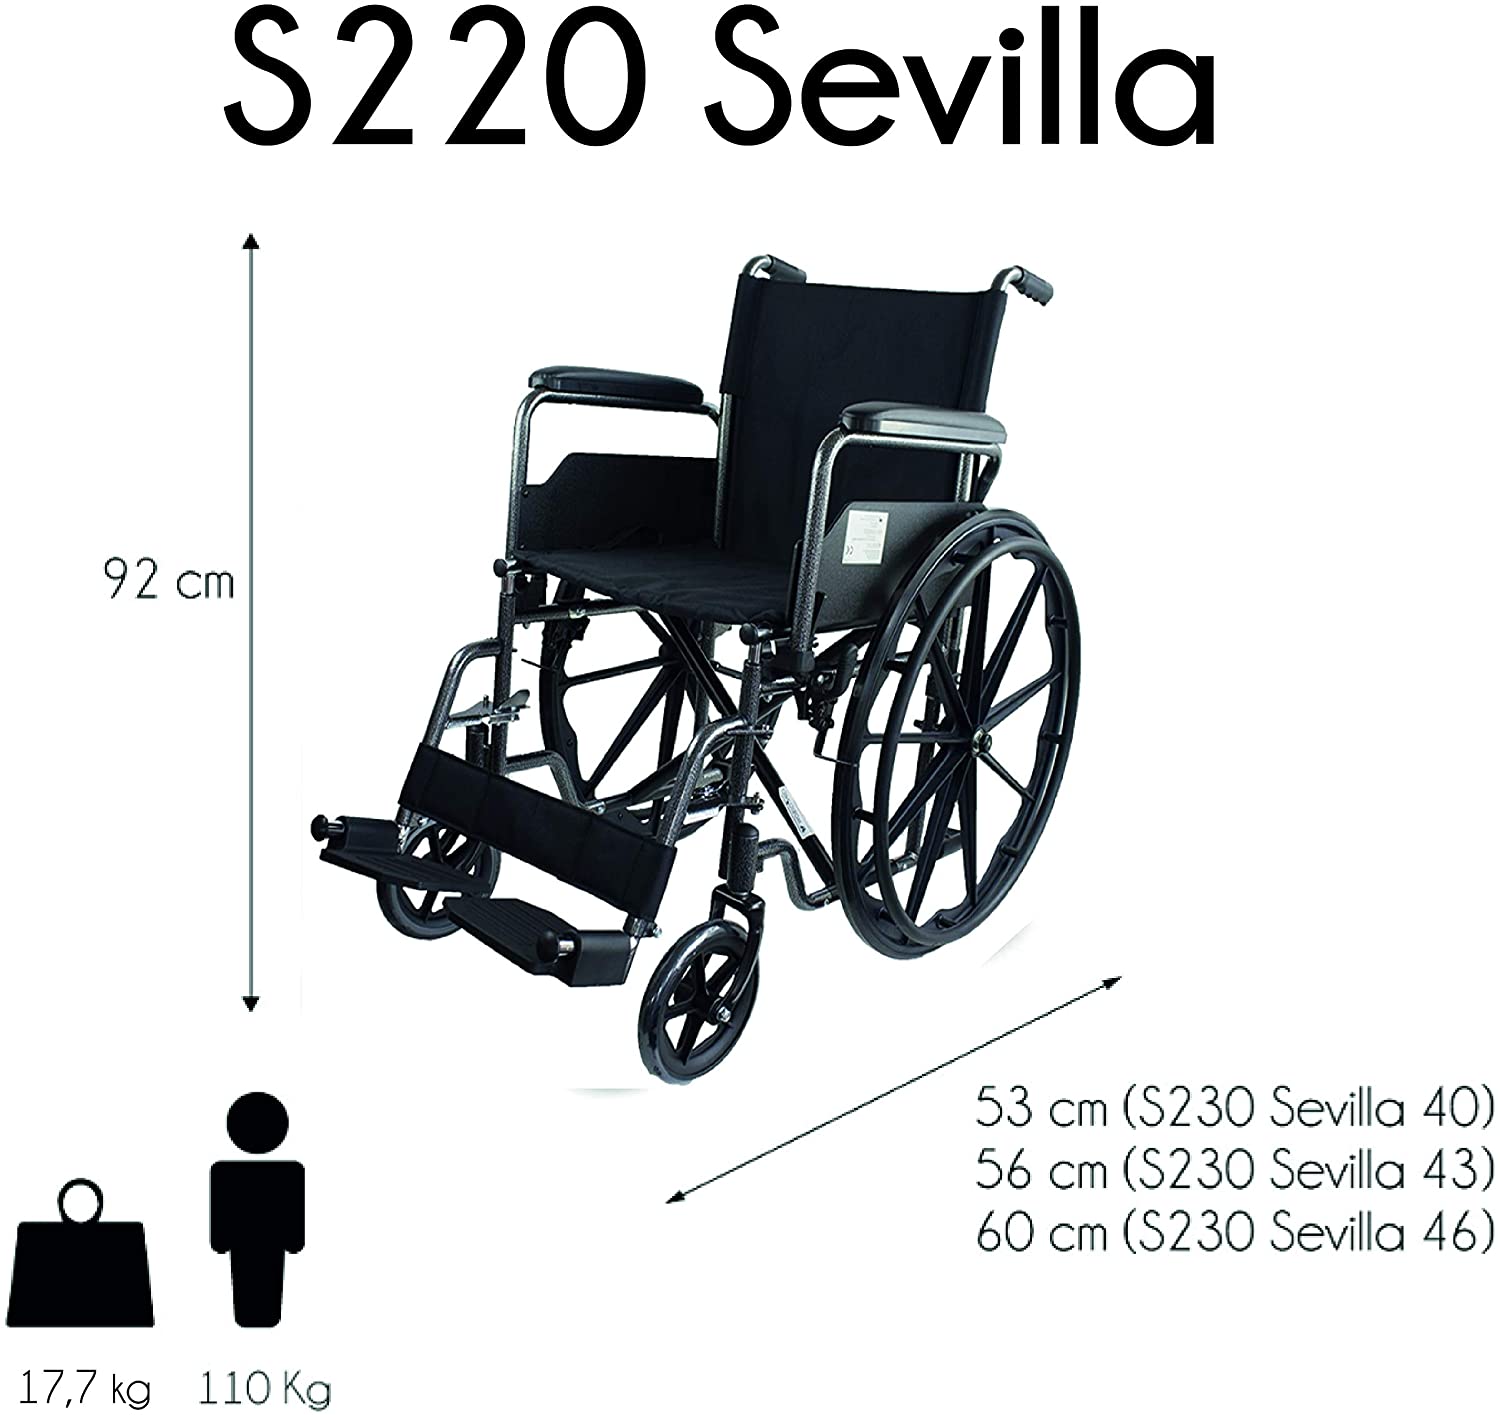 Wheelchair S220 Steel And Autopropulsable 46Cm